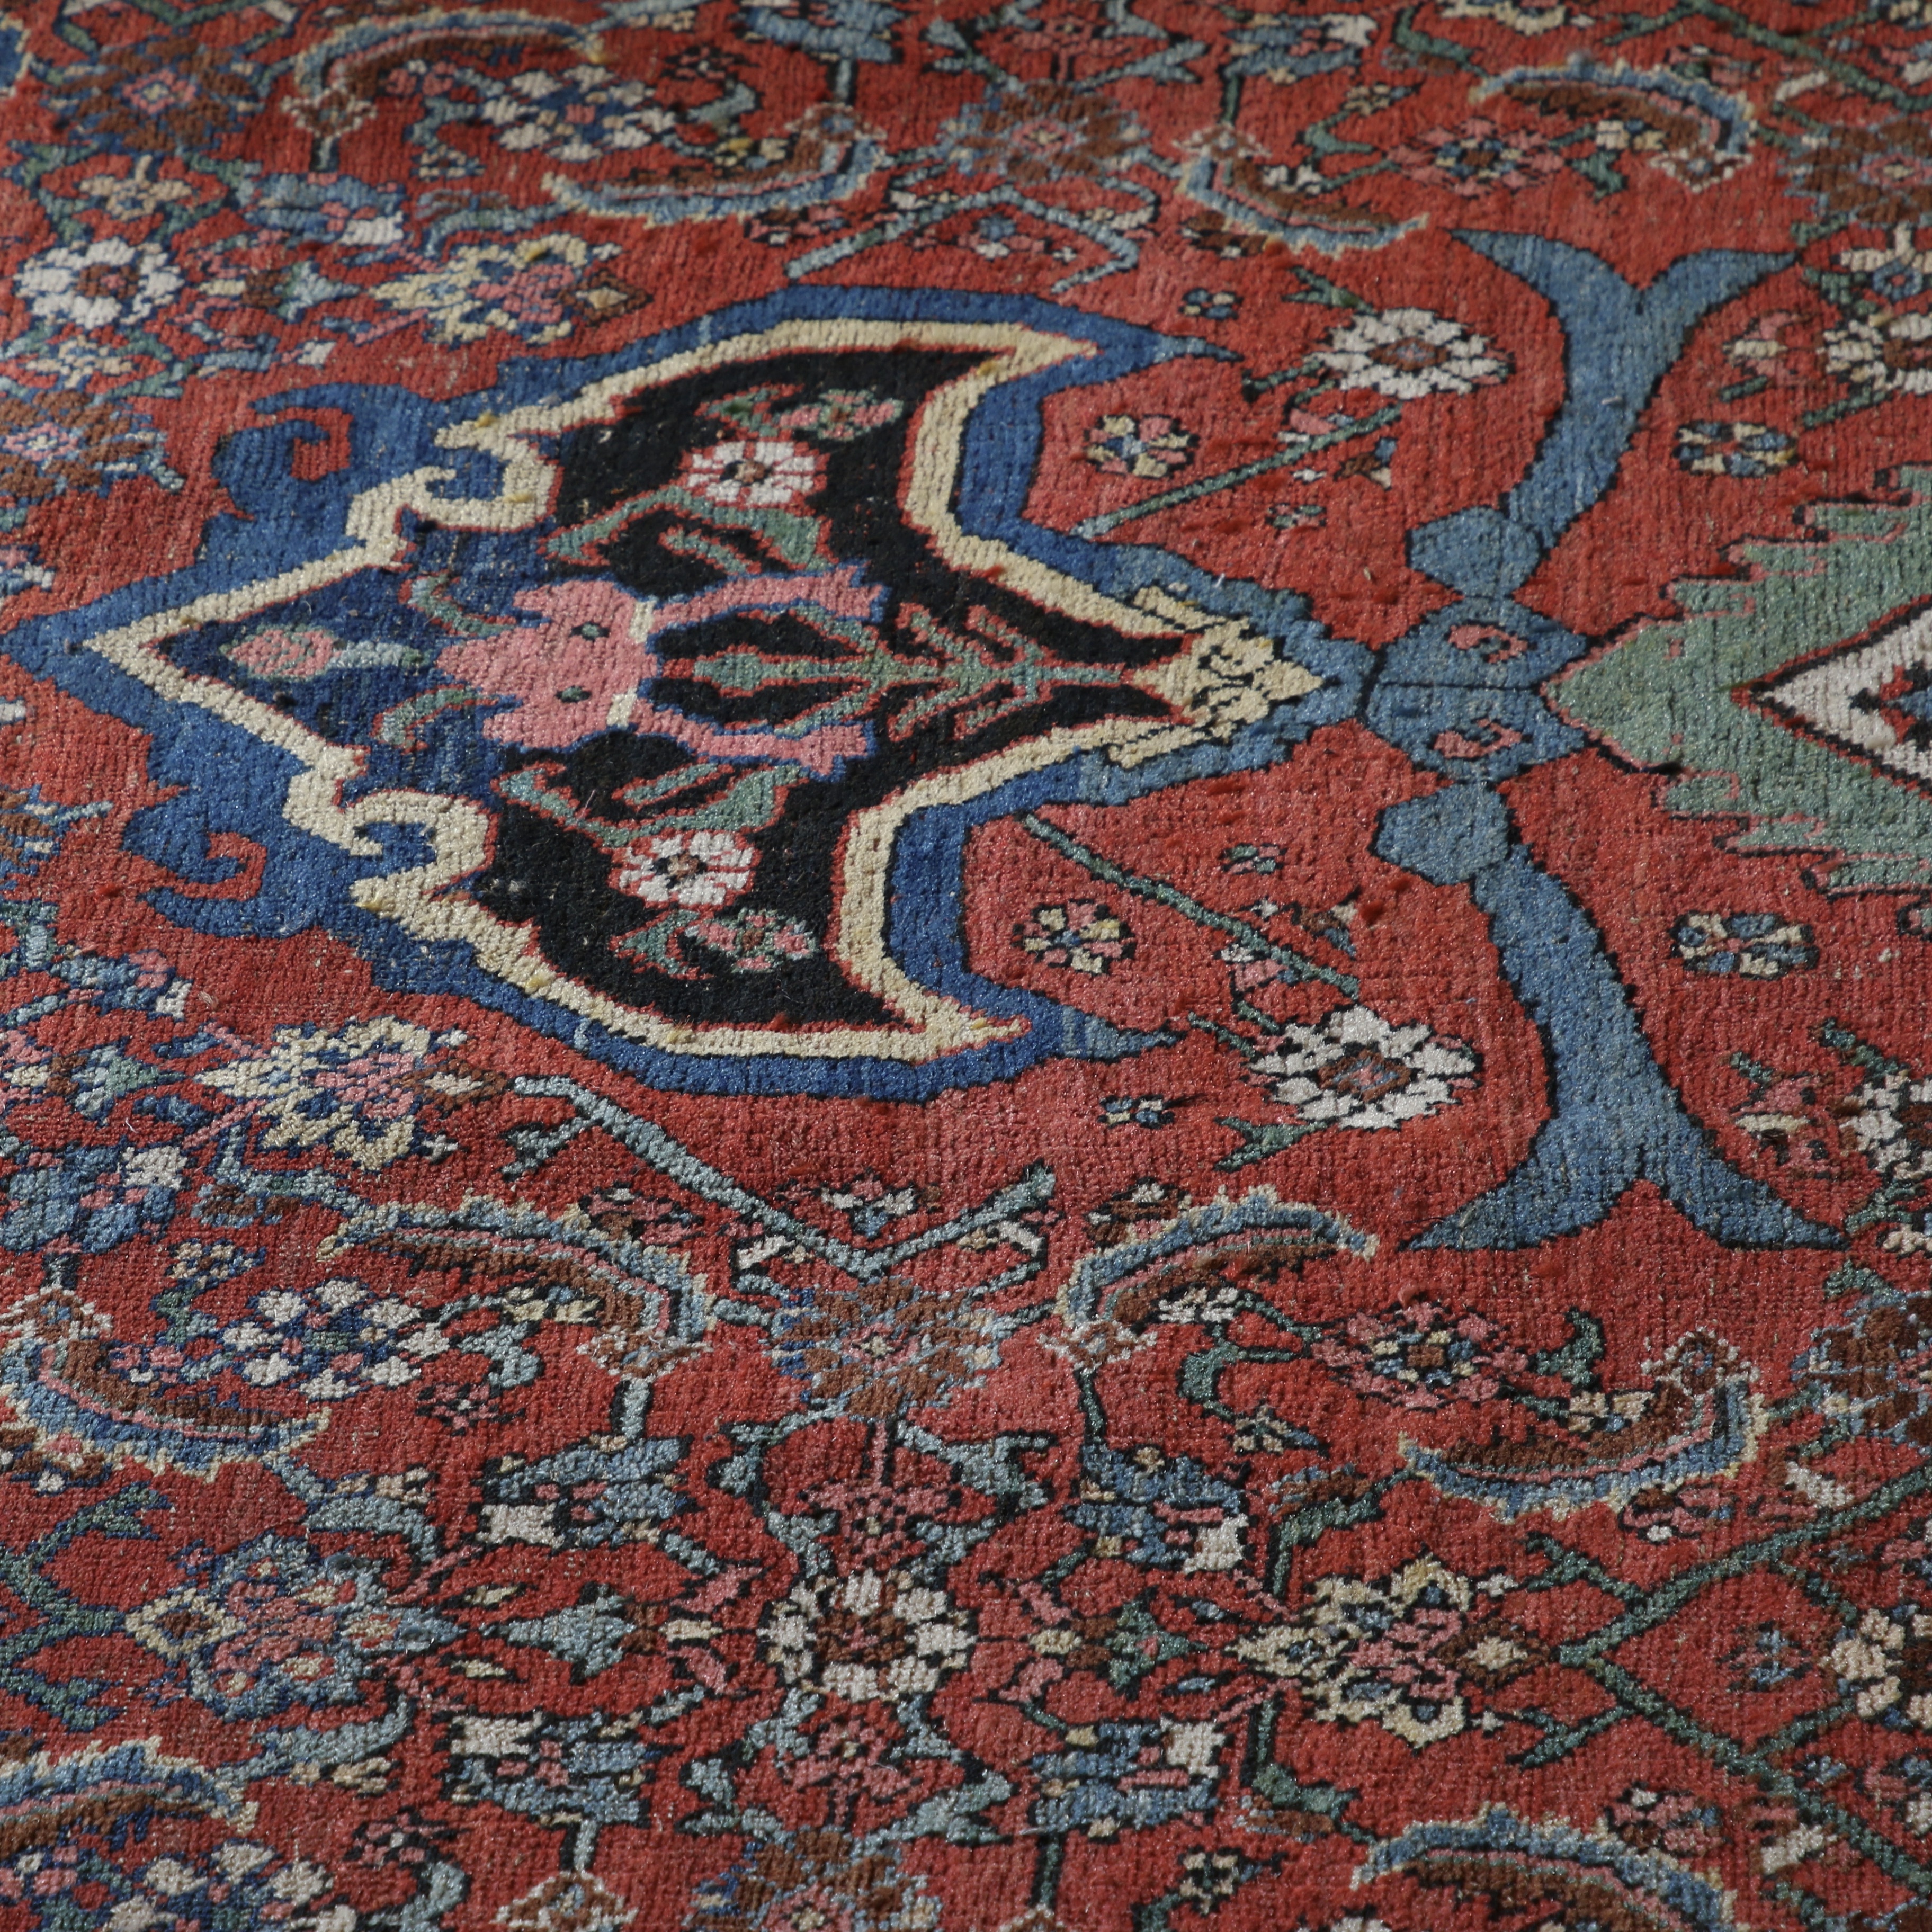 19th-Century Iranian Carpet